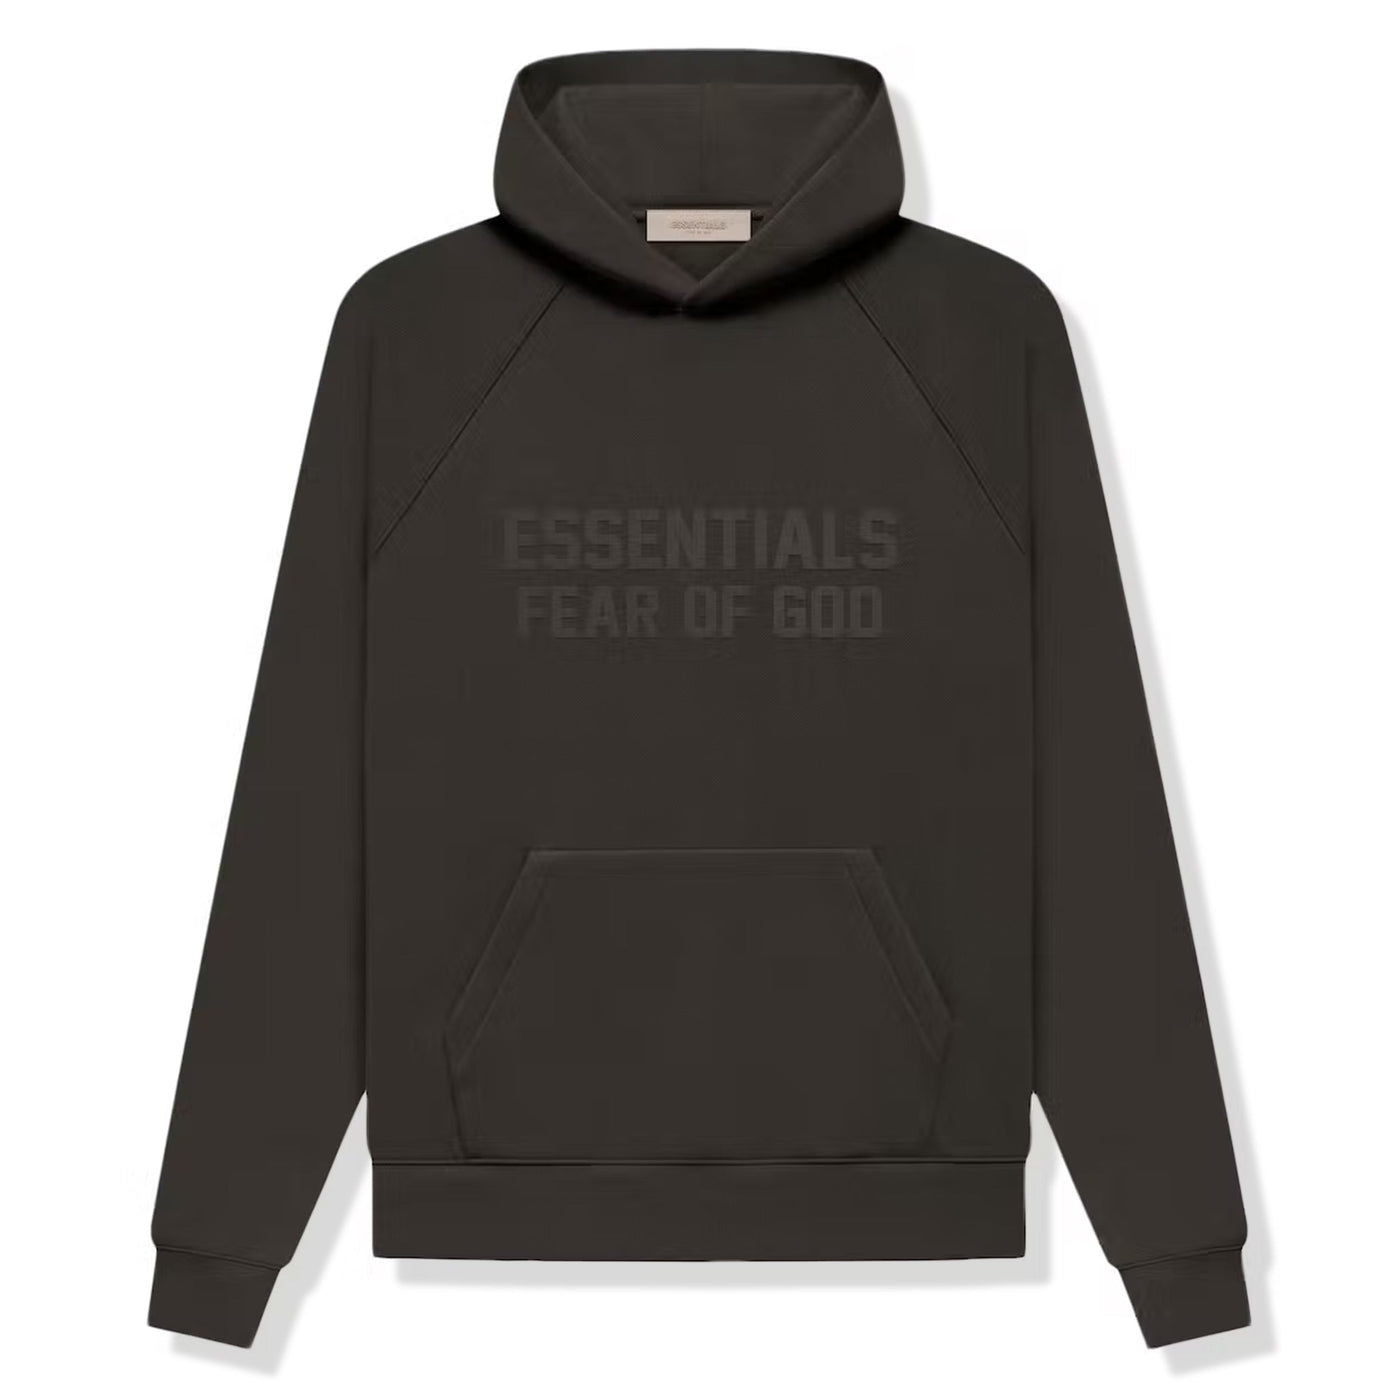 Fear Of God Essentials Logo Flocked Off Black Hoodie